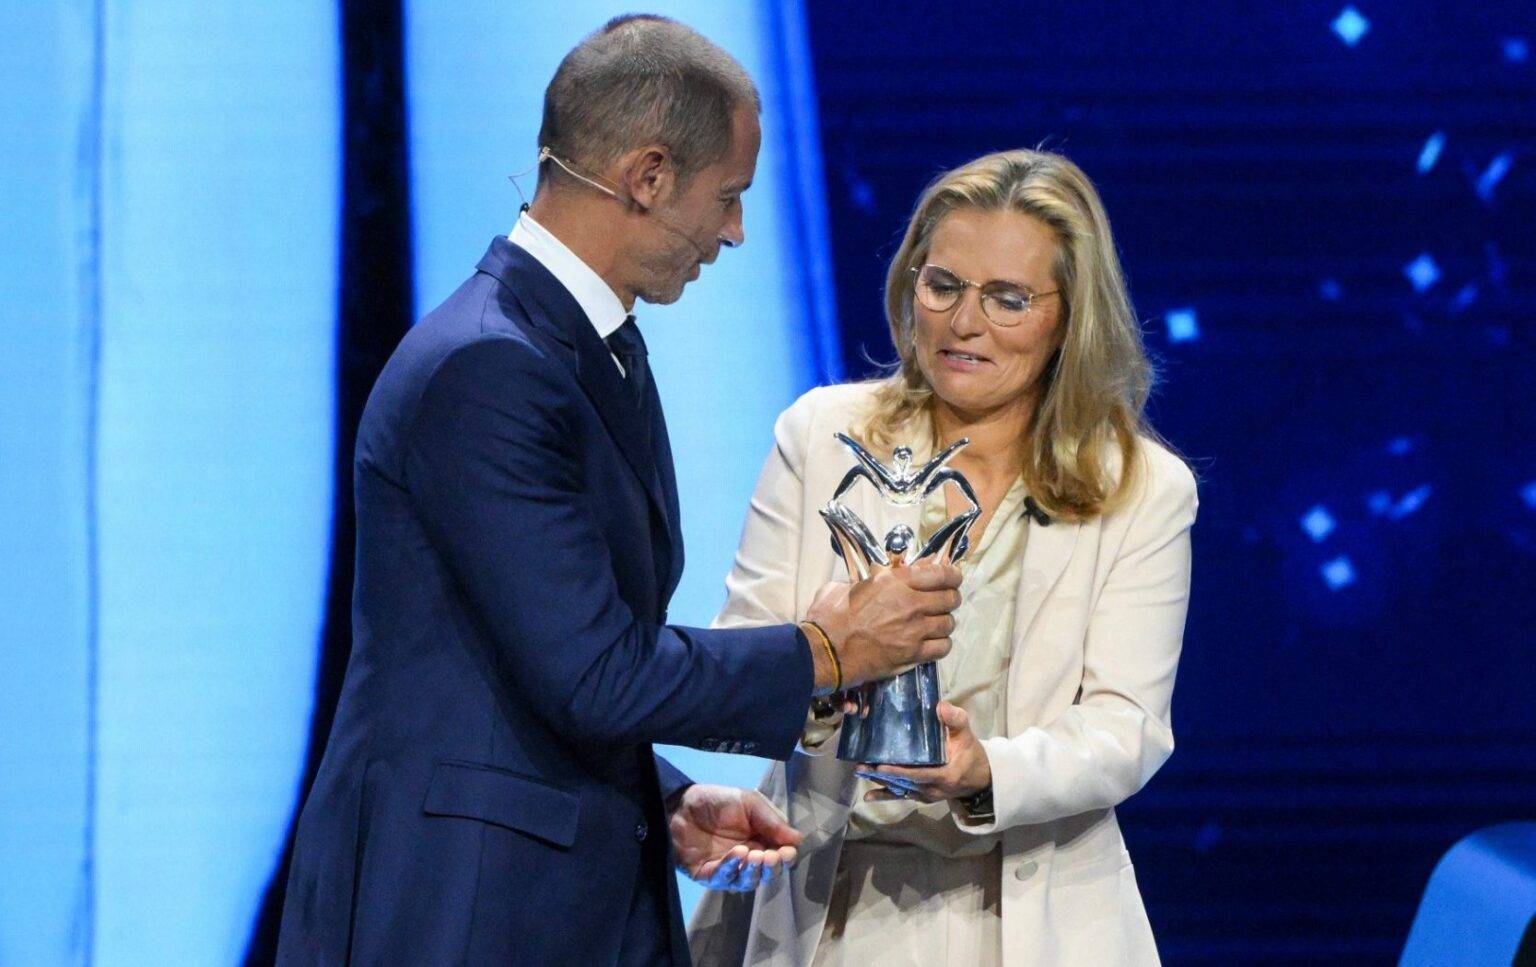 Sarina Wiegman dedicates Uefa Women’s Coach of the Year award to Spain players